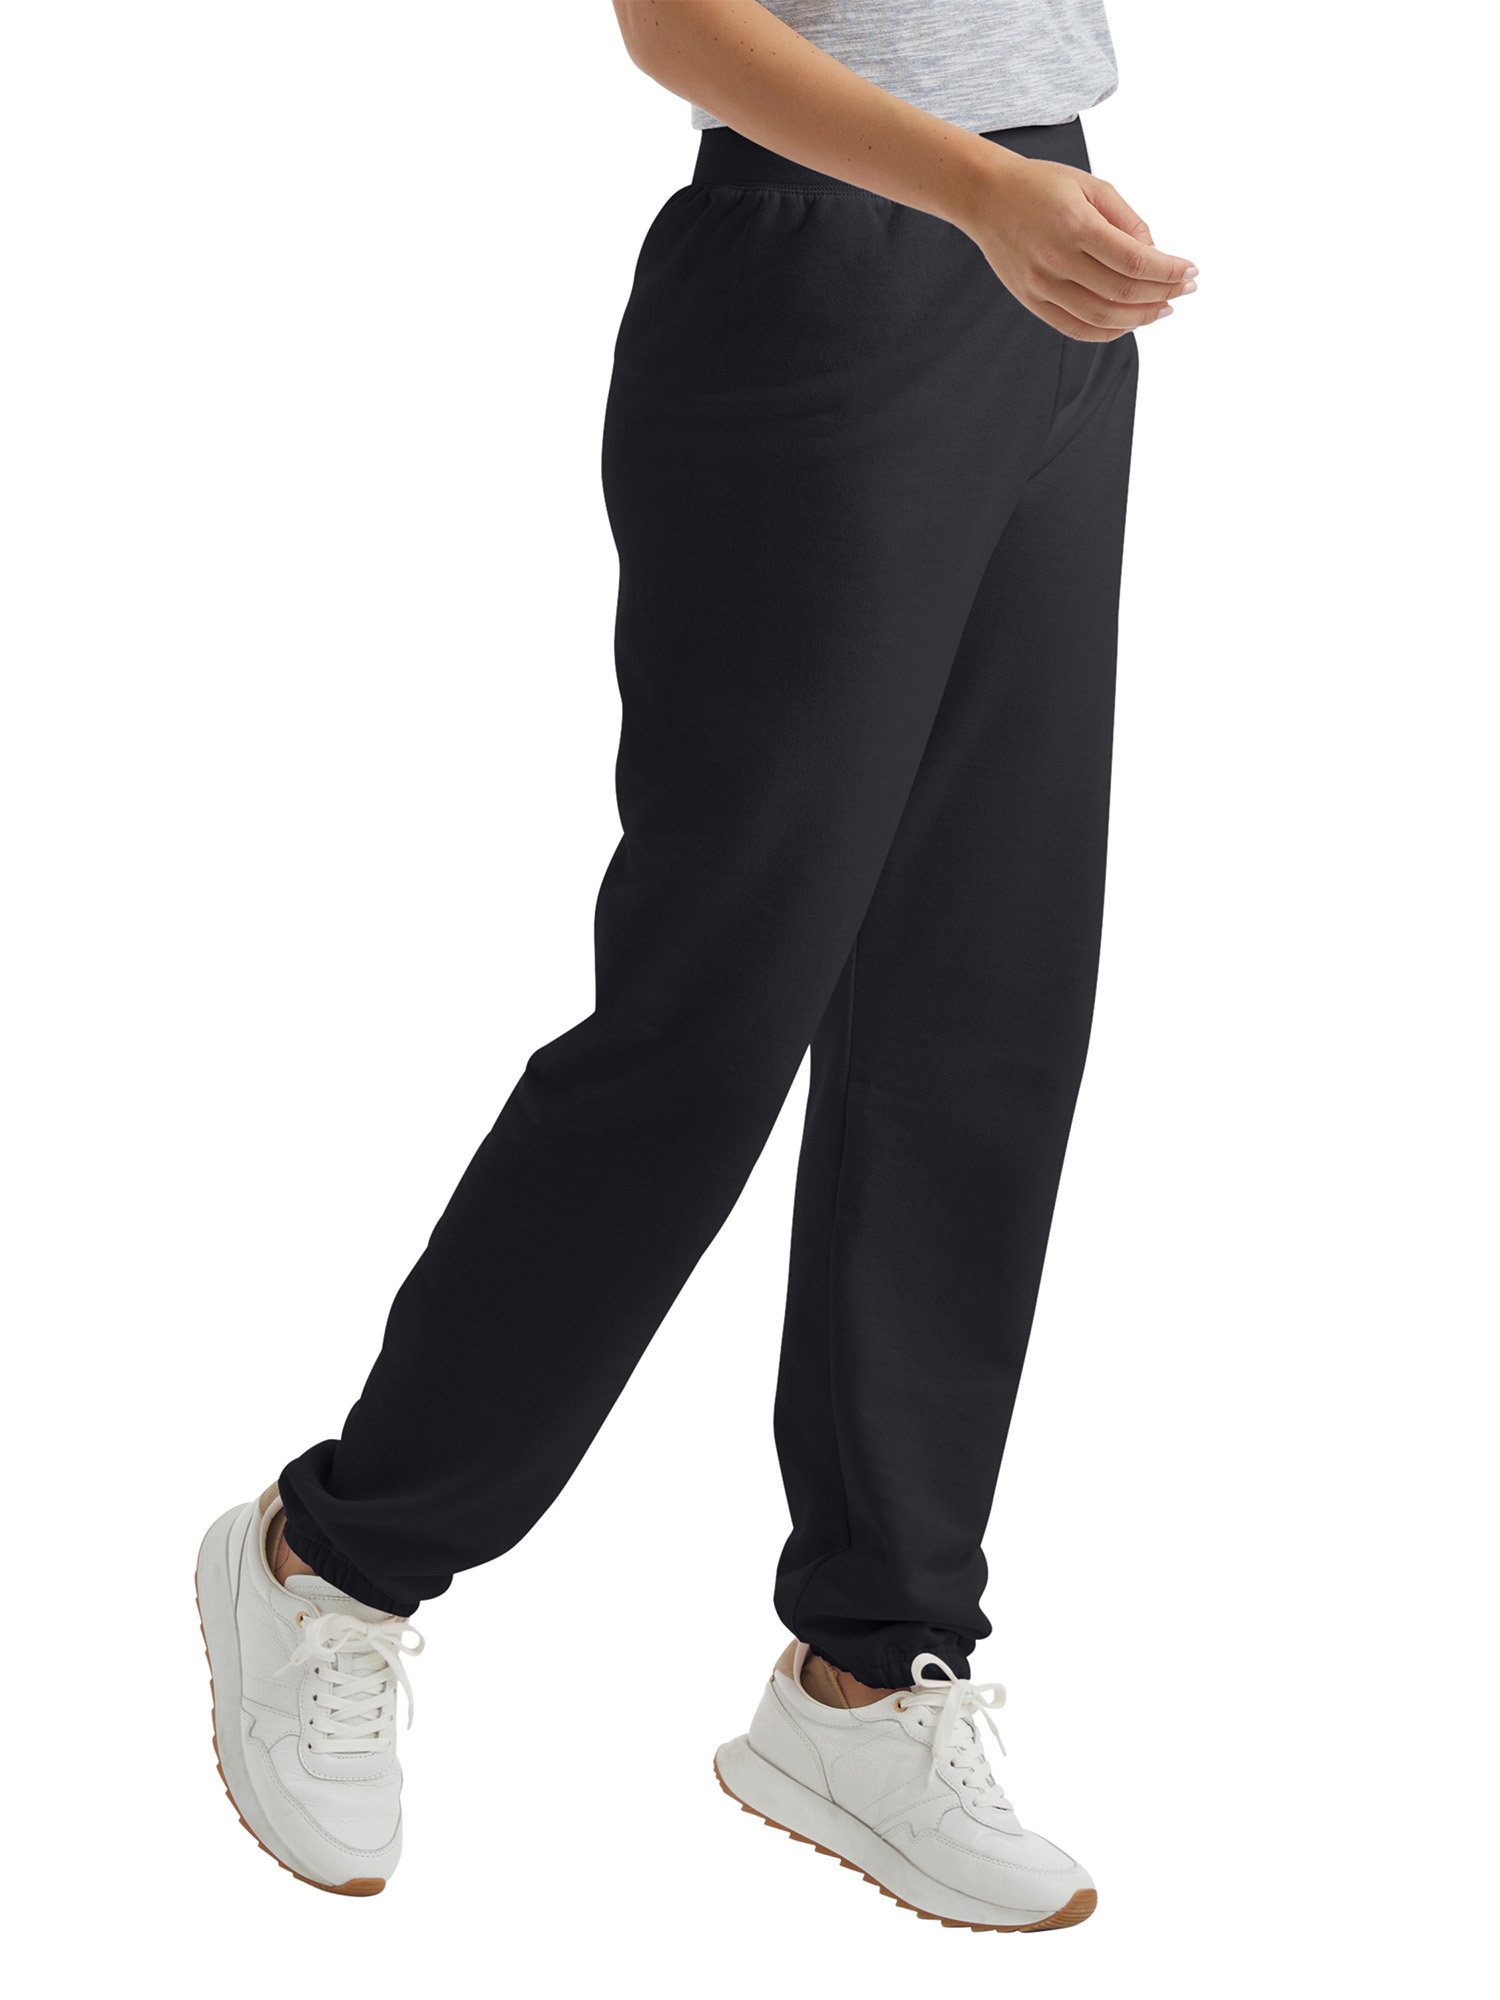 Hanes ComfortSoft Women's Sweatpants, 29” Inseam, Sizes S-XXL - image 3 of 6